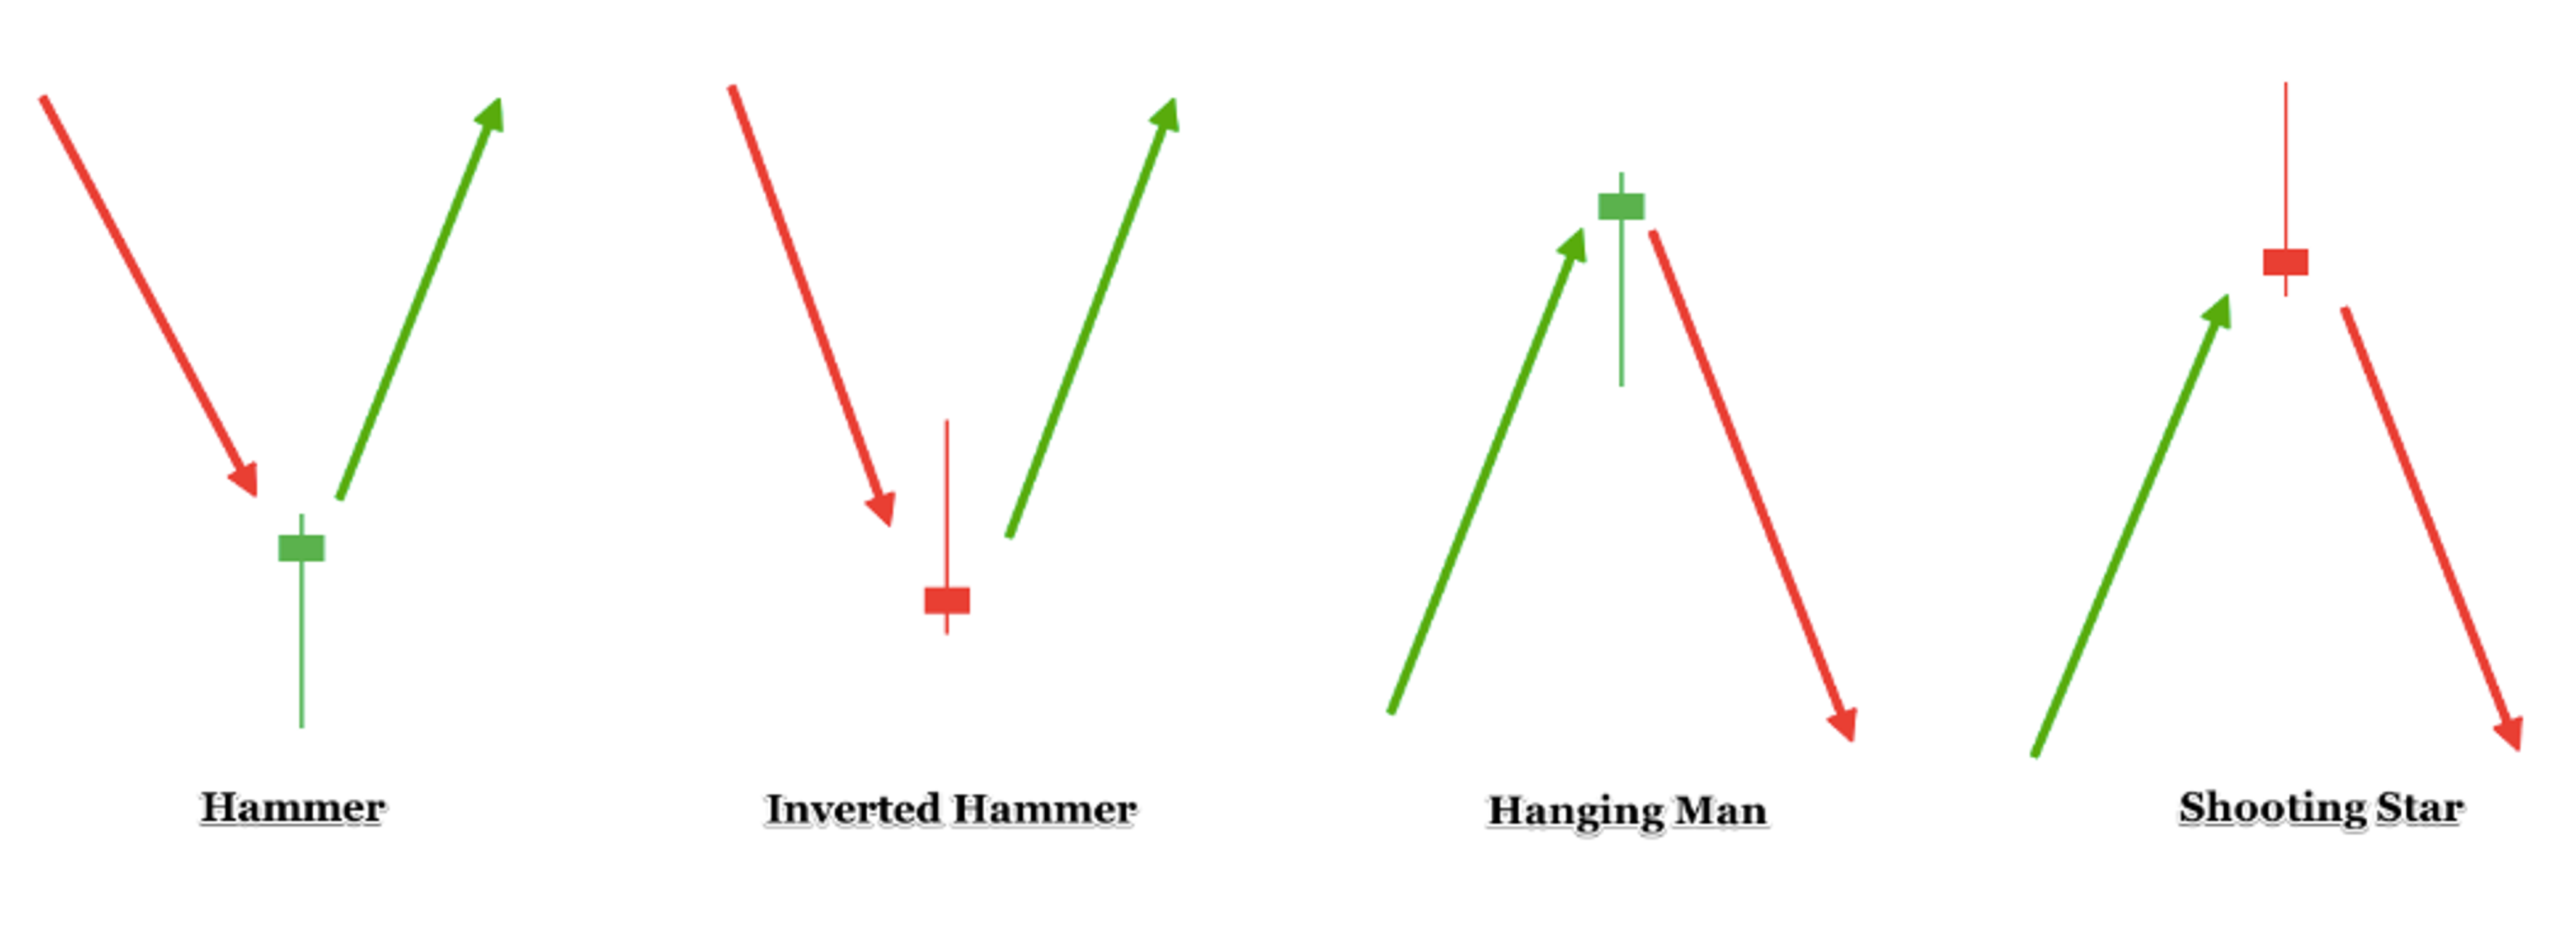 Hammer, inverted hammer, hanging man, and shooting star candlesticks.